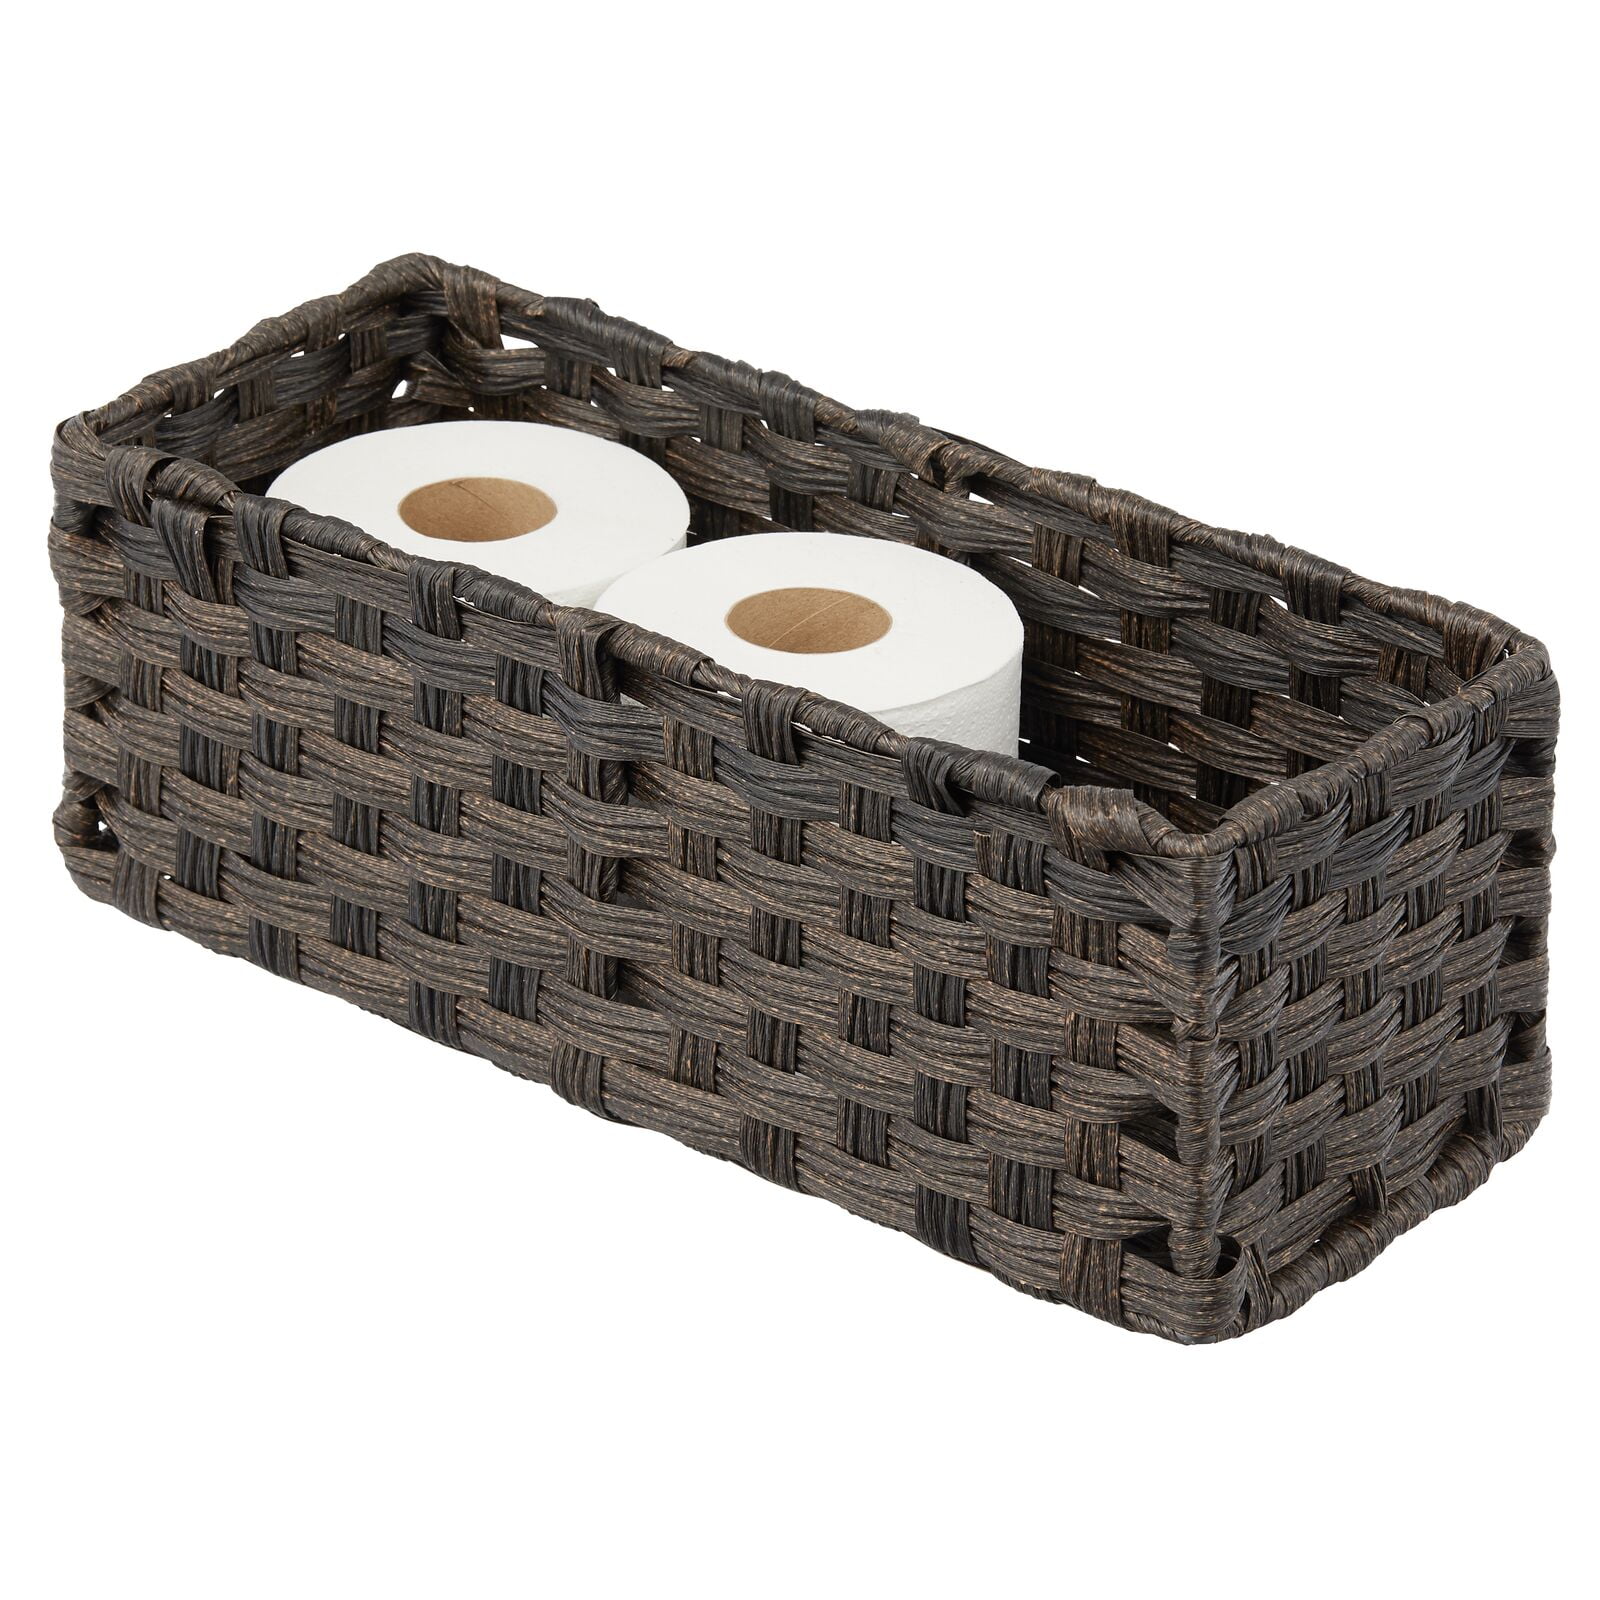 mDesign Small Woven Toilet Tank Bathroom Storage Basket - Camel Brown